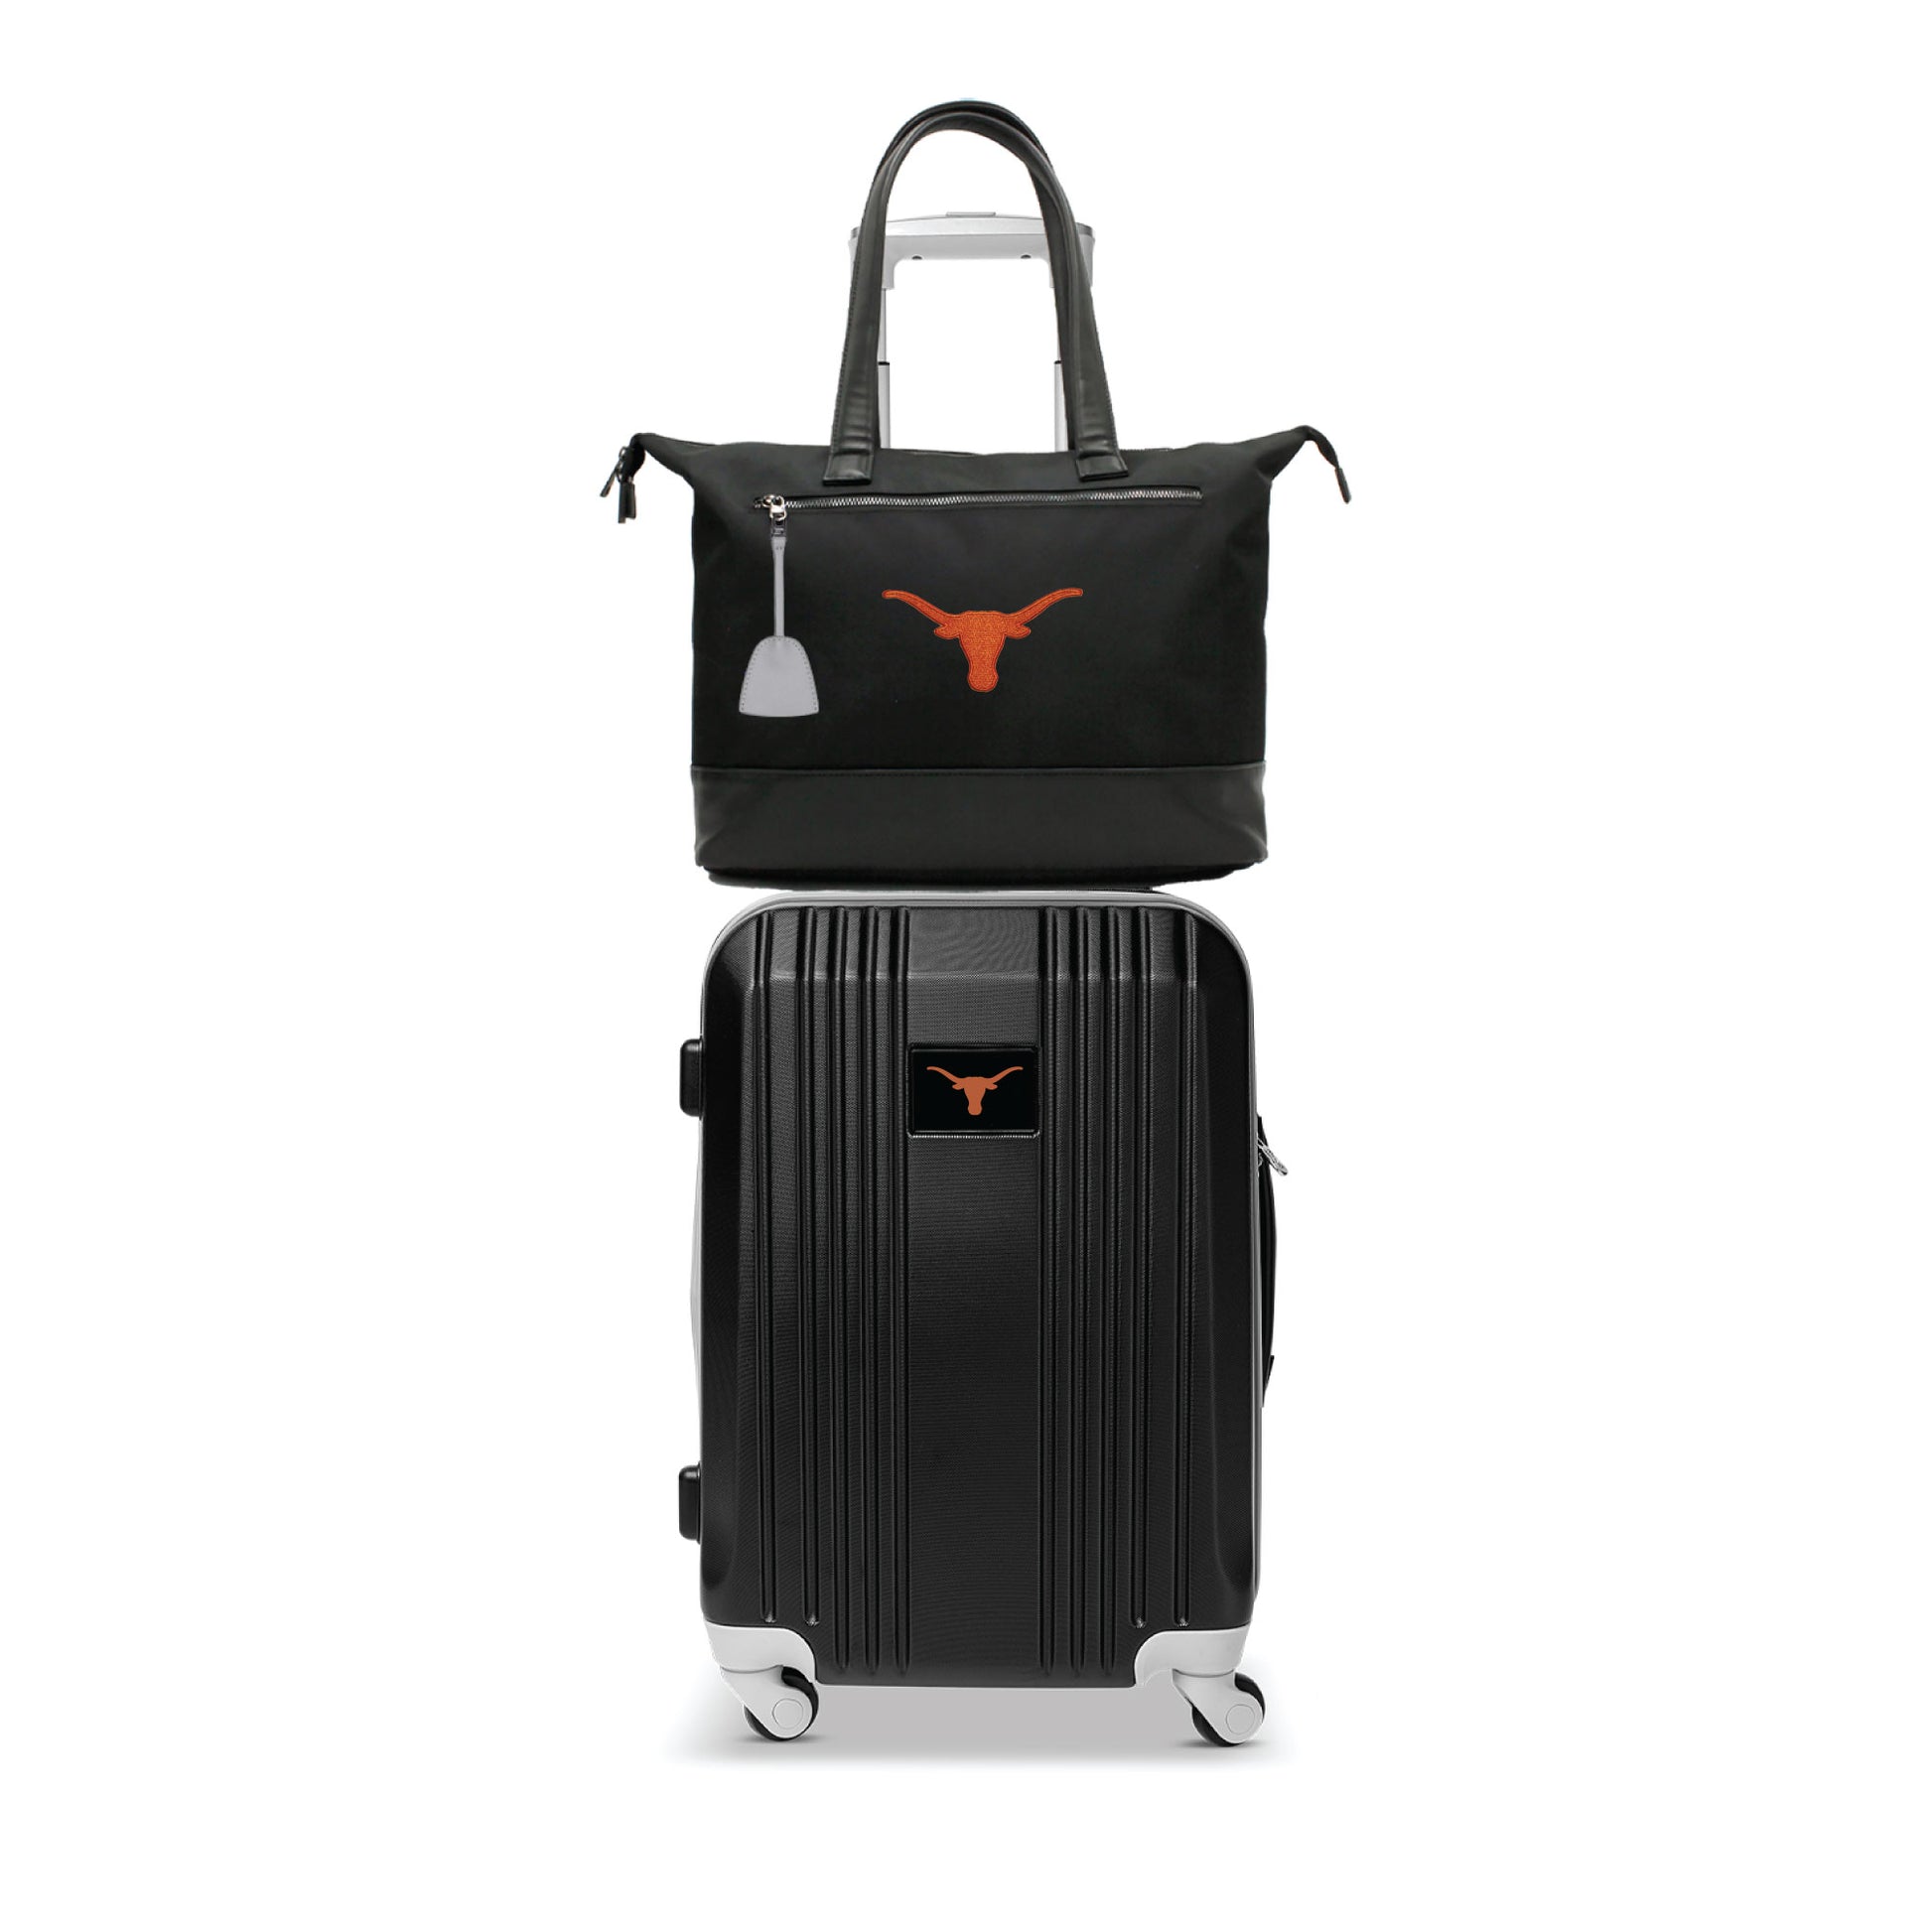 Texas Longhorns Premium Laptop Tote Bag and Luggage Set